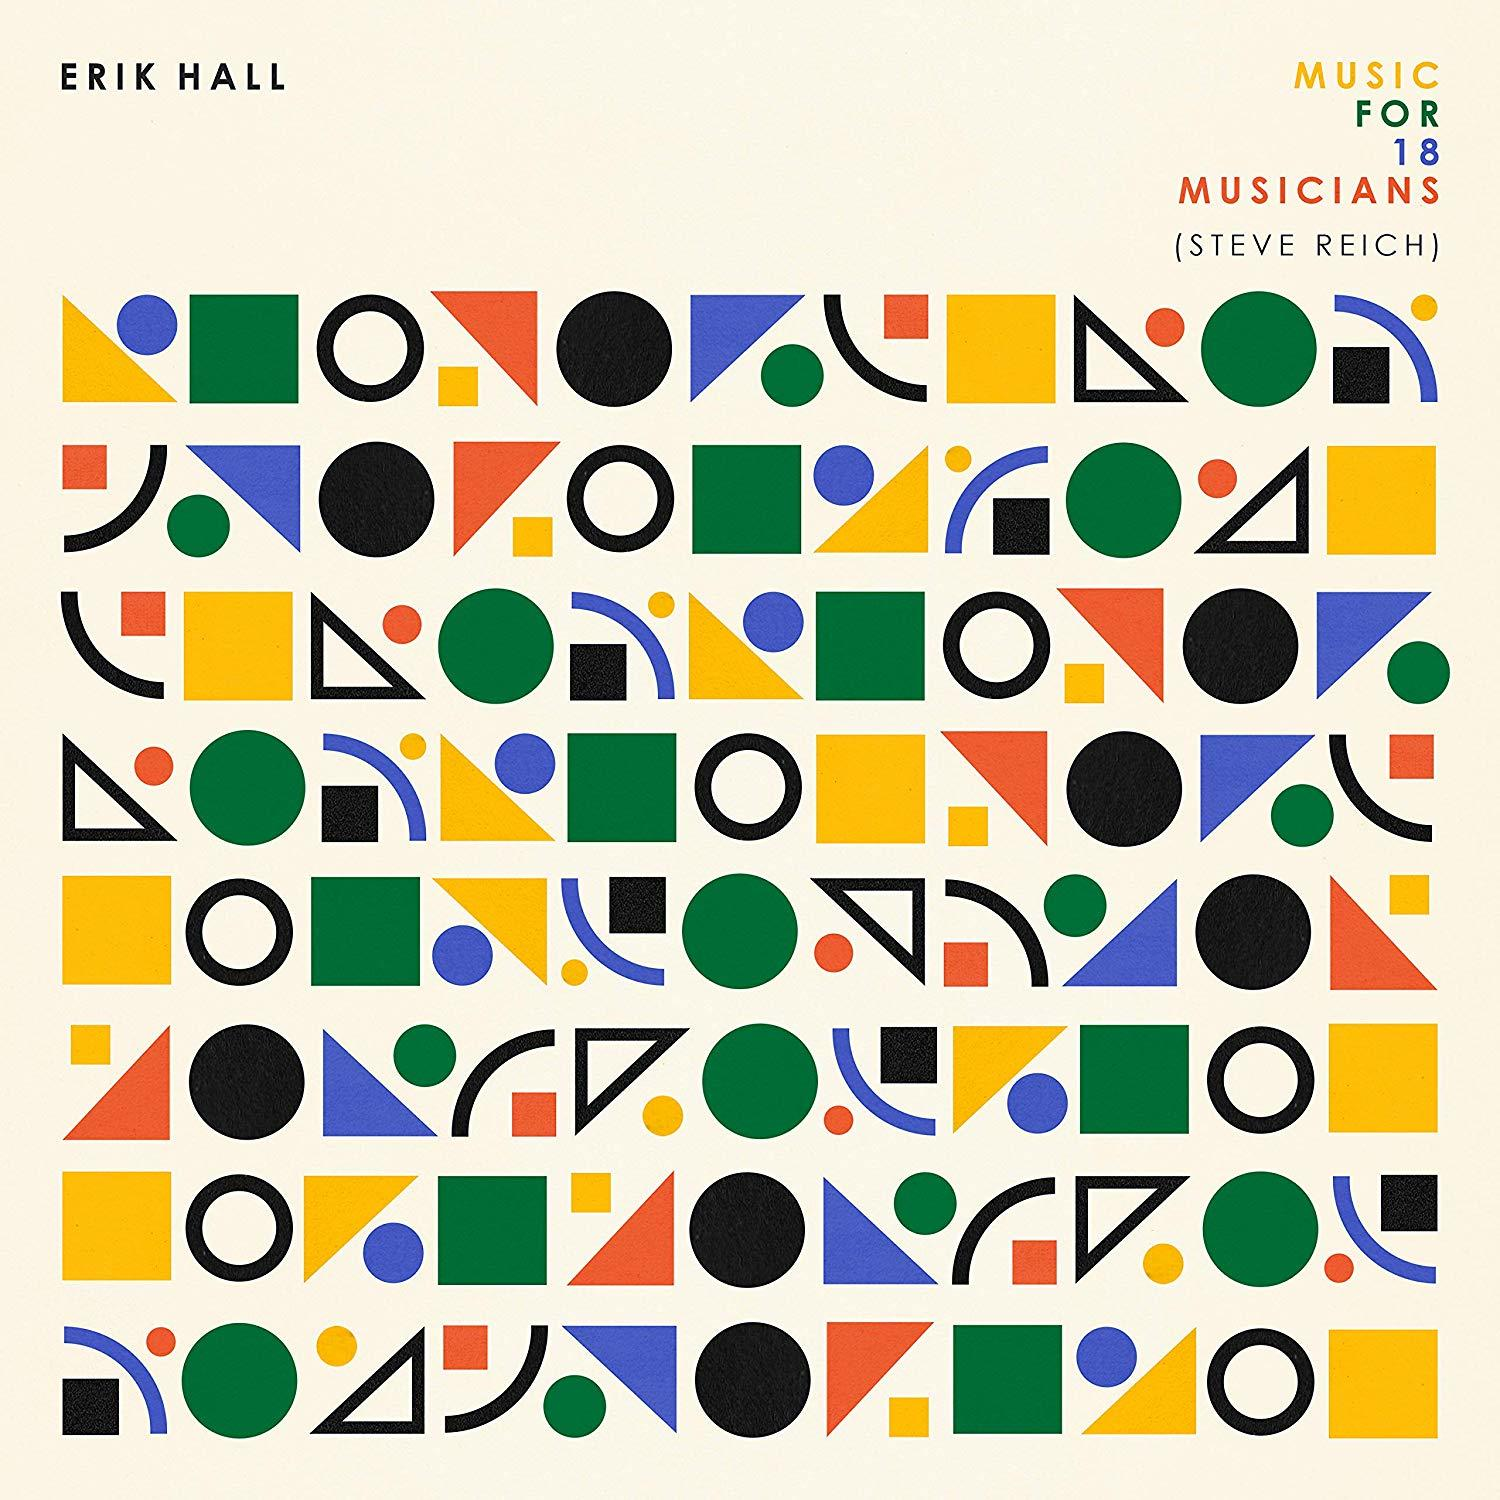 Hall (STEVE MUSICIANS (Vinyl) Erik 18 MUSIC REICH) FOR - -